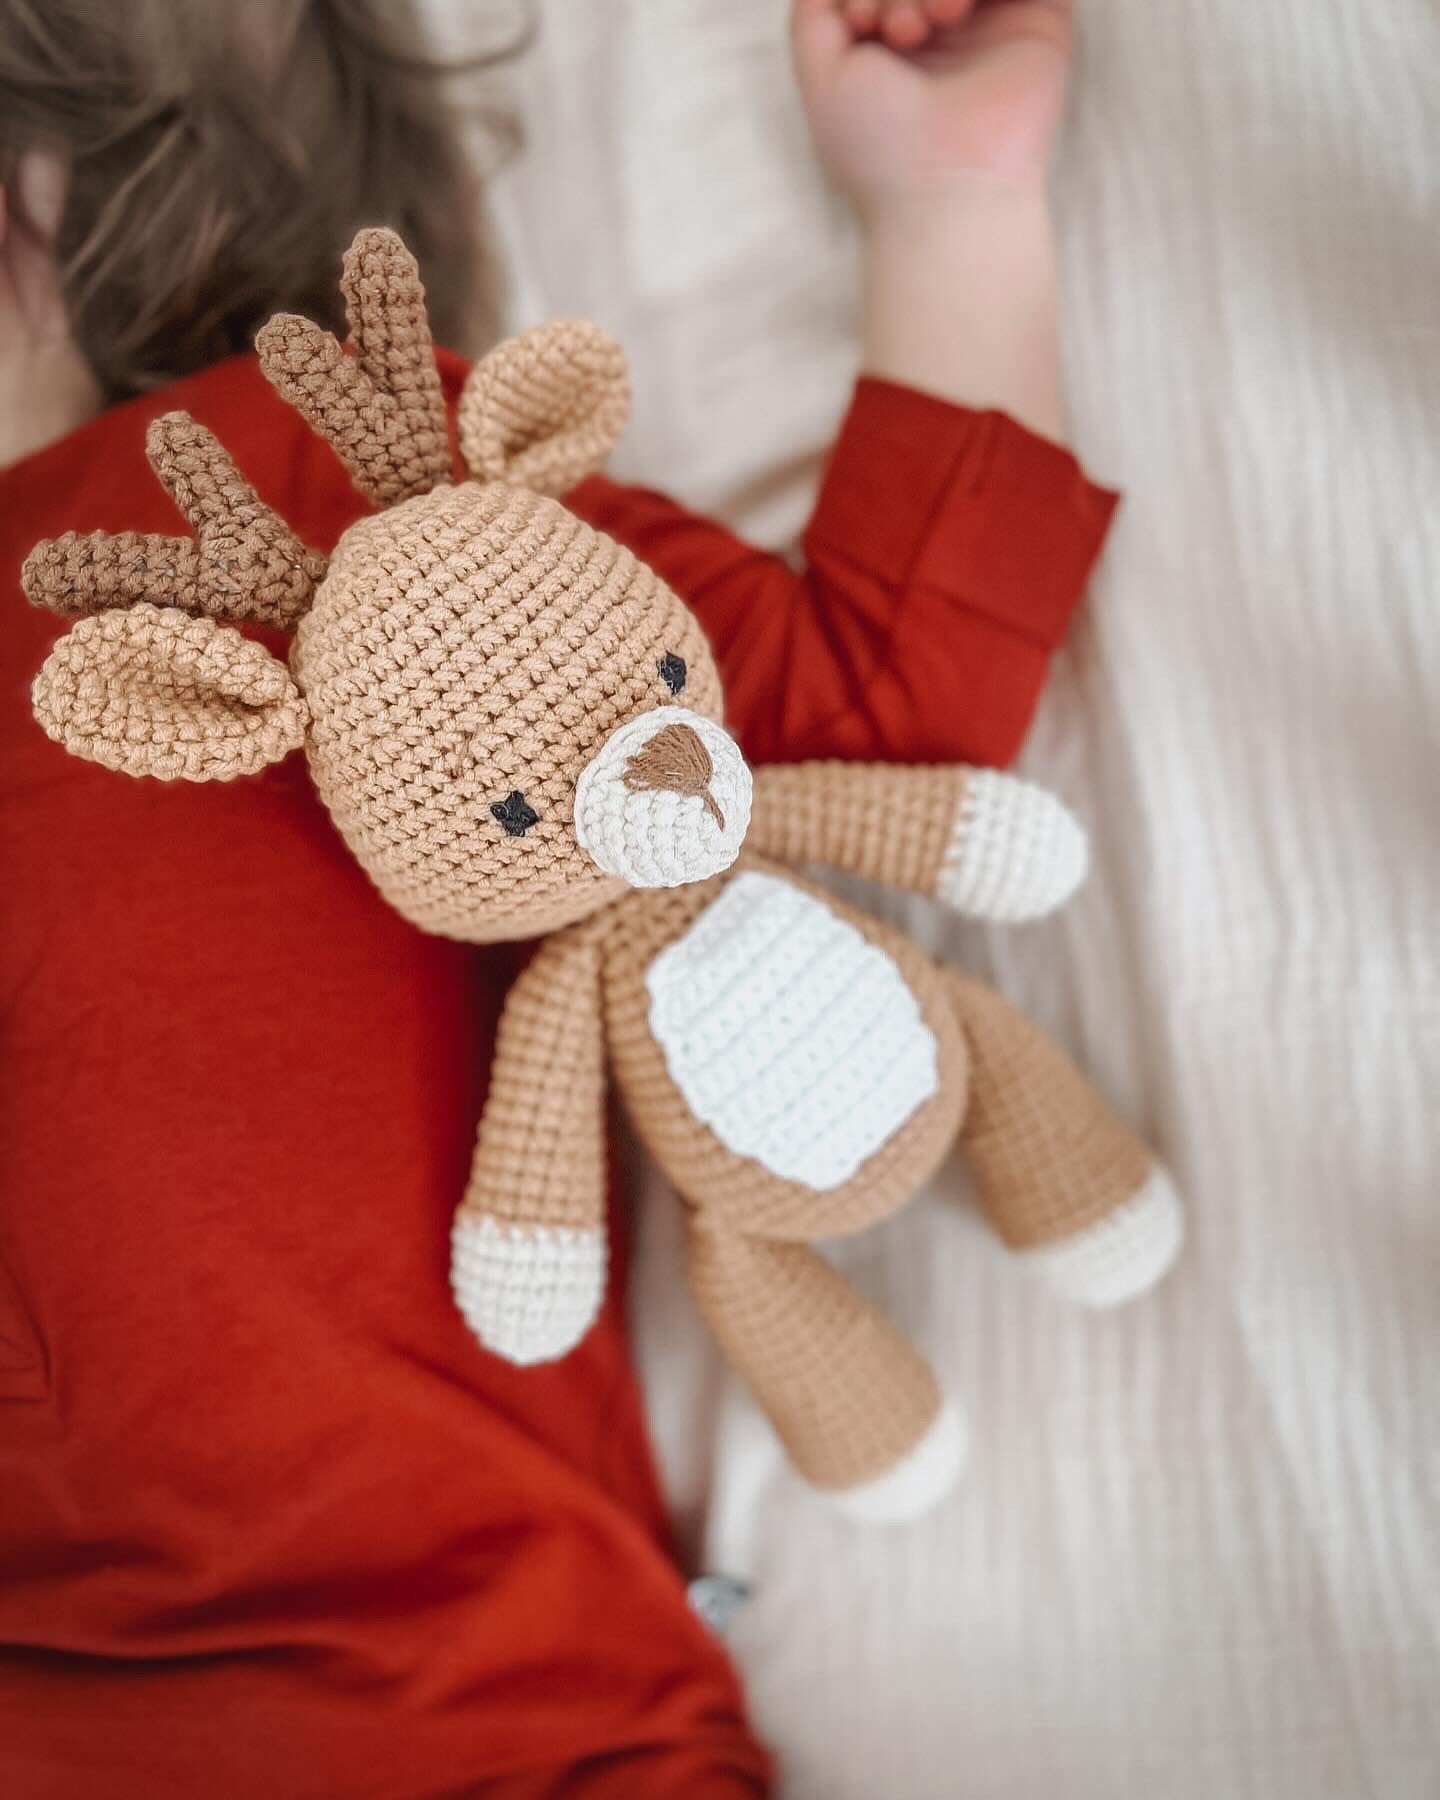 Handmade Deer Stuffed Animal made with brown and white yarn